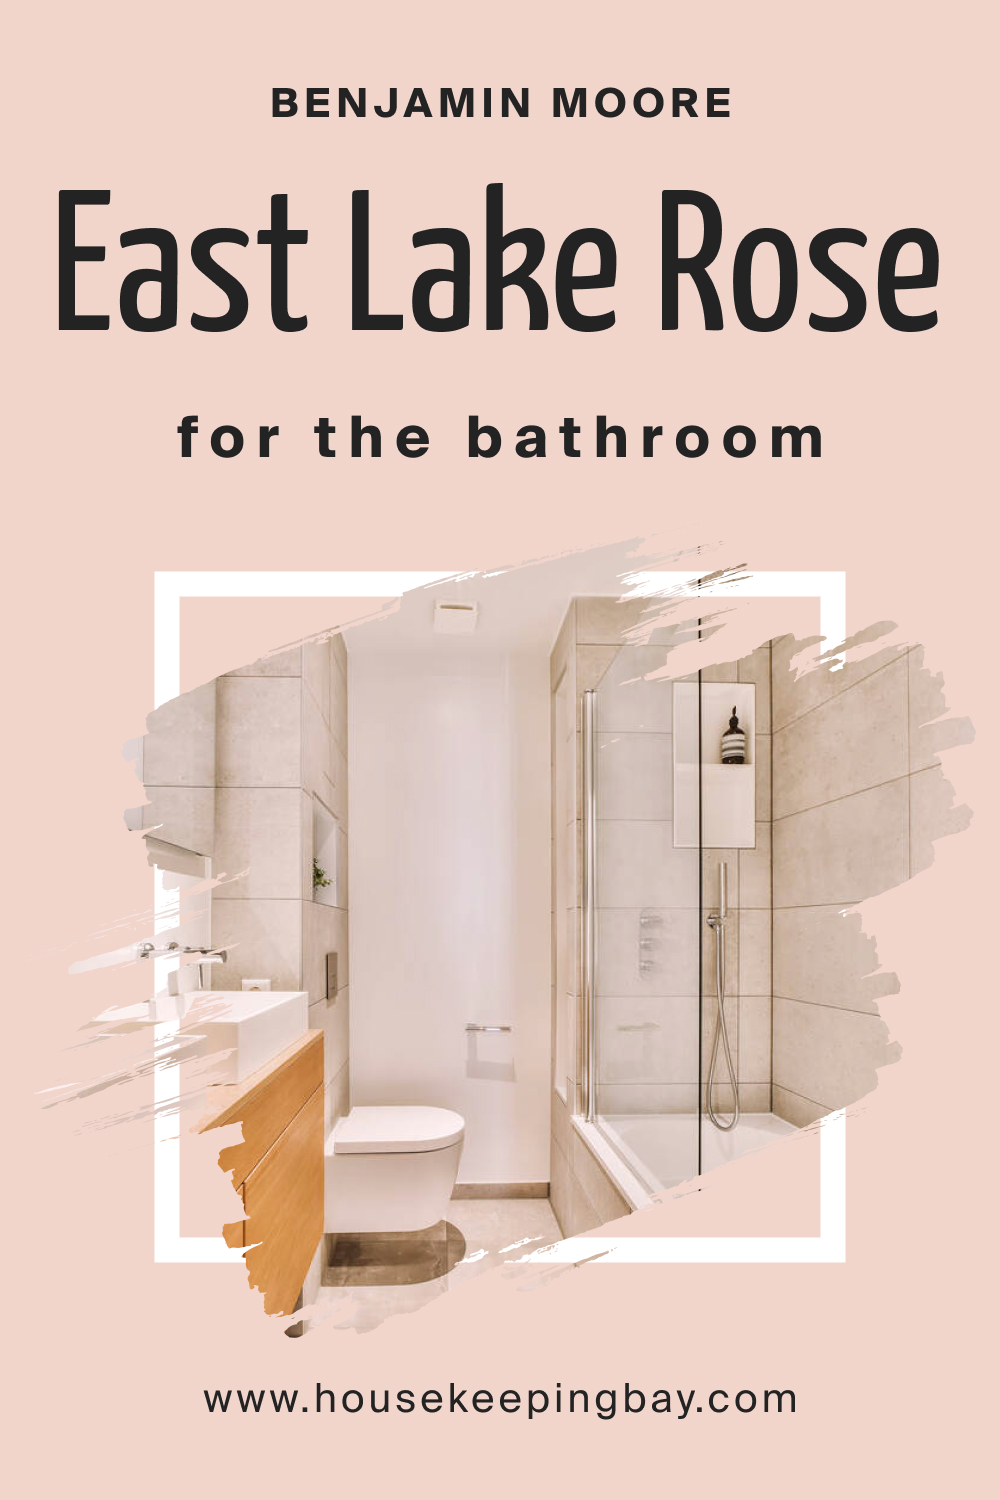 Benjamin Moore. BM East Lake Rose 043 in the Bathroom